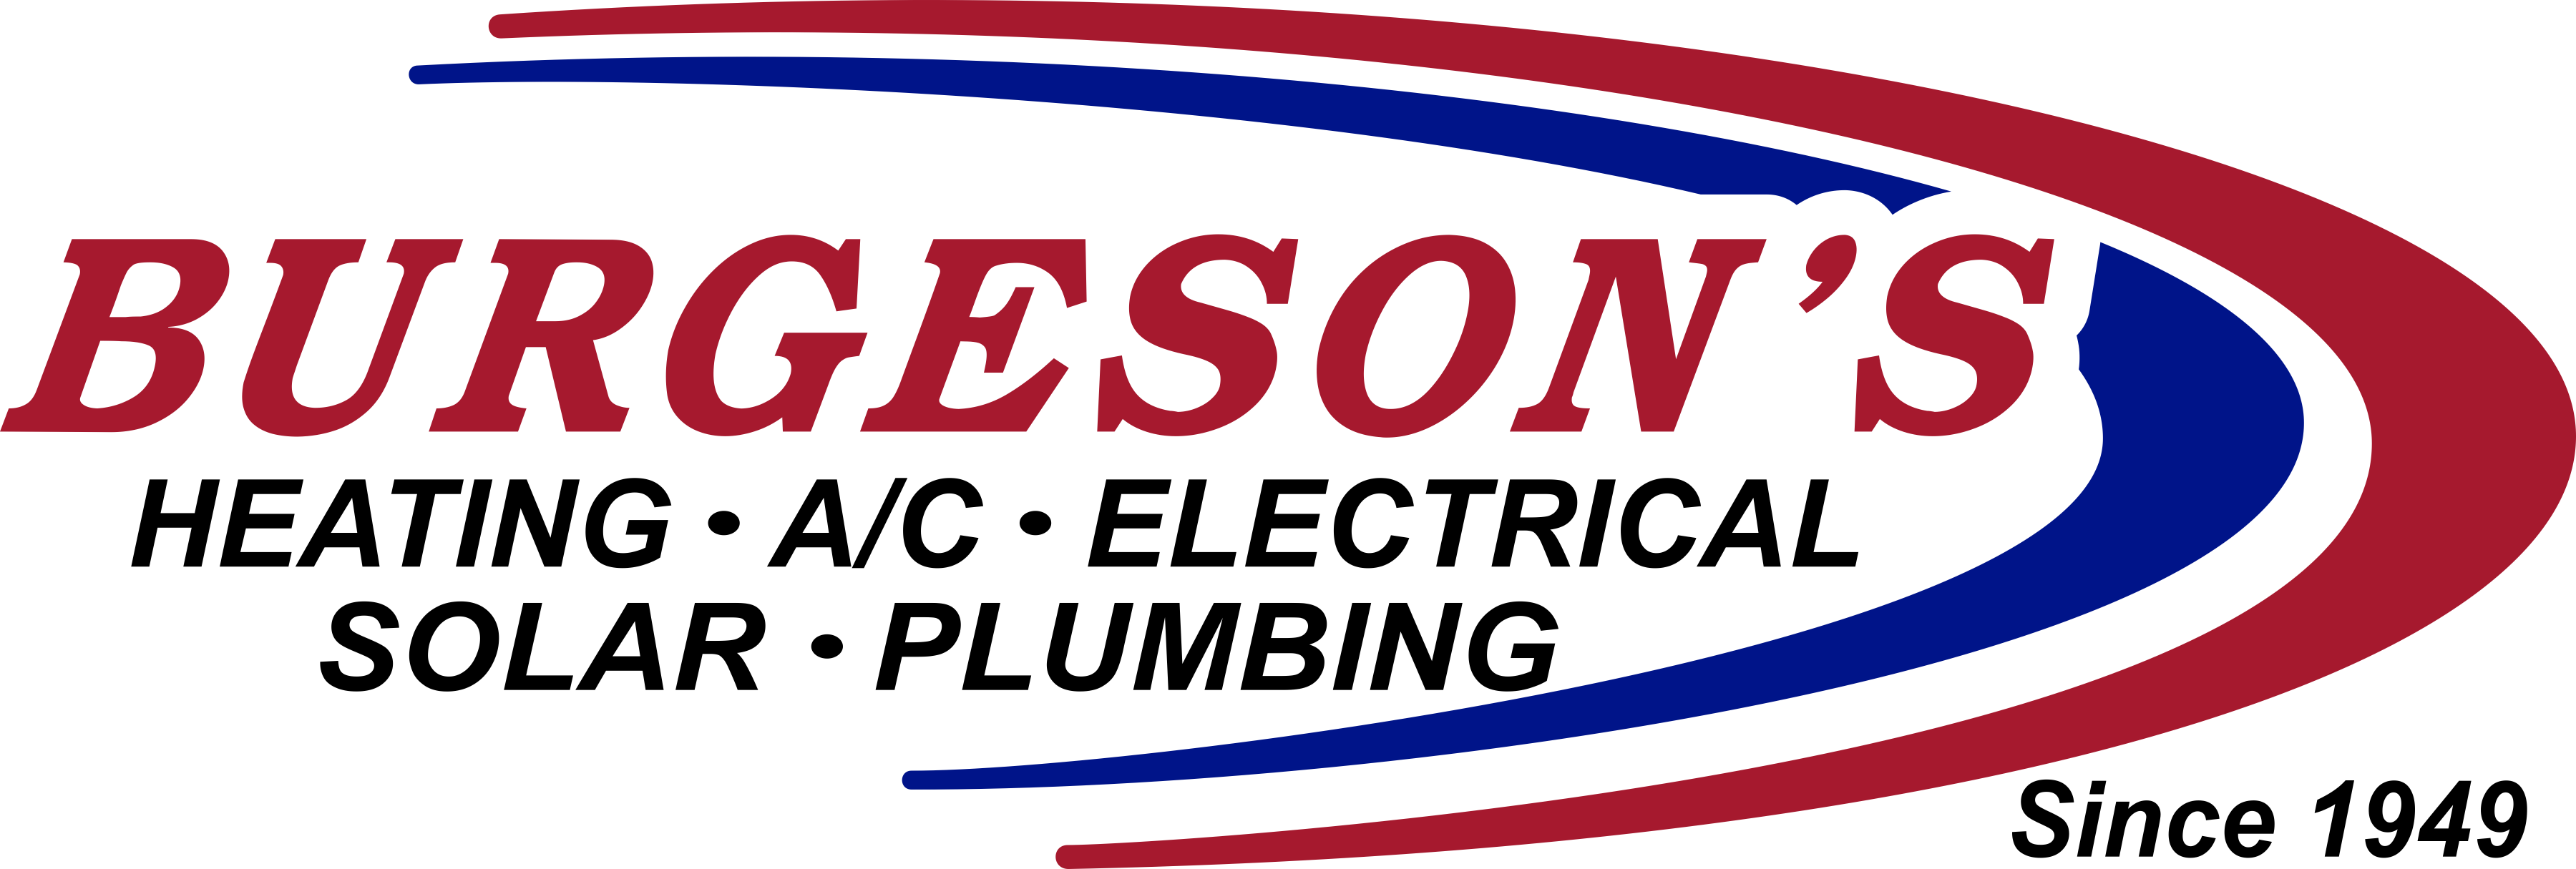 Burgesons logo transparent 12 IW